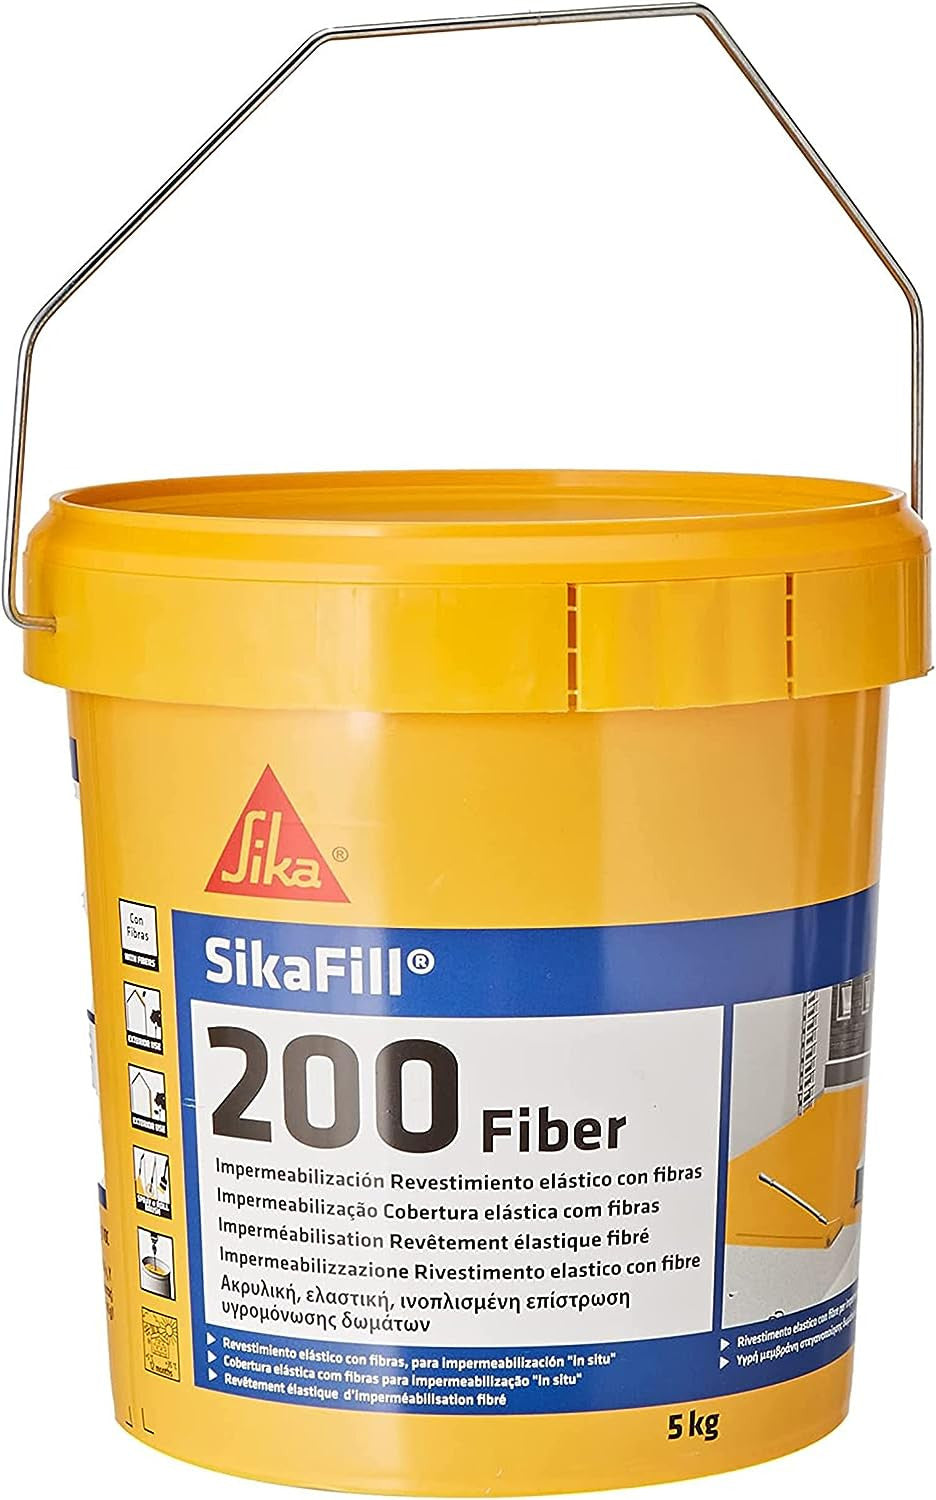 Sikafill-200 Fibres Elastiques Imperméabilisation Bidon 5kg SIKA - 5